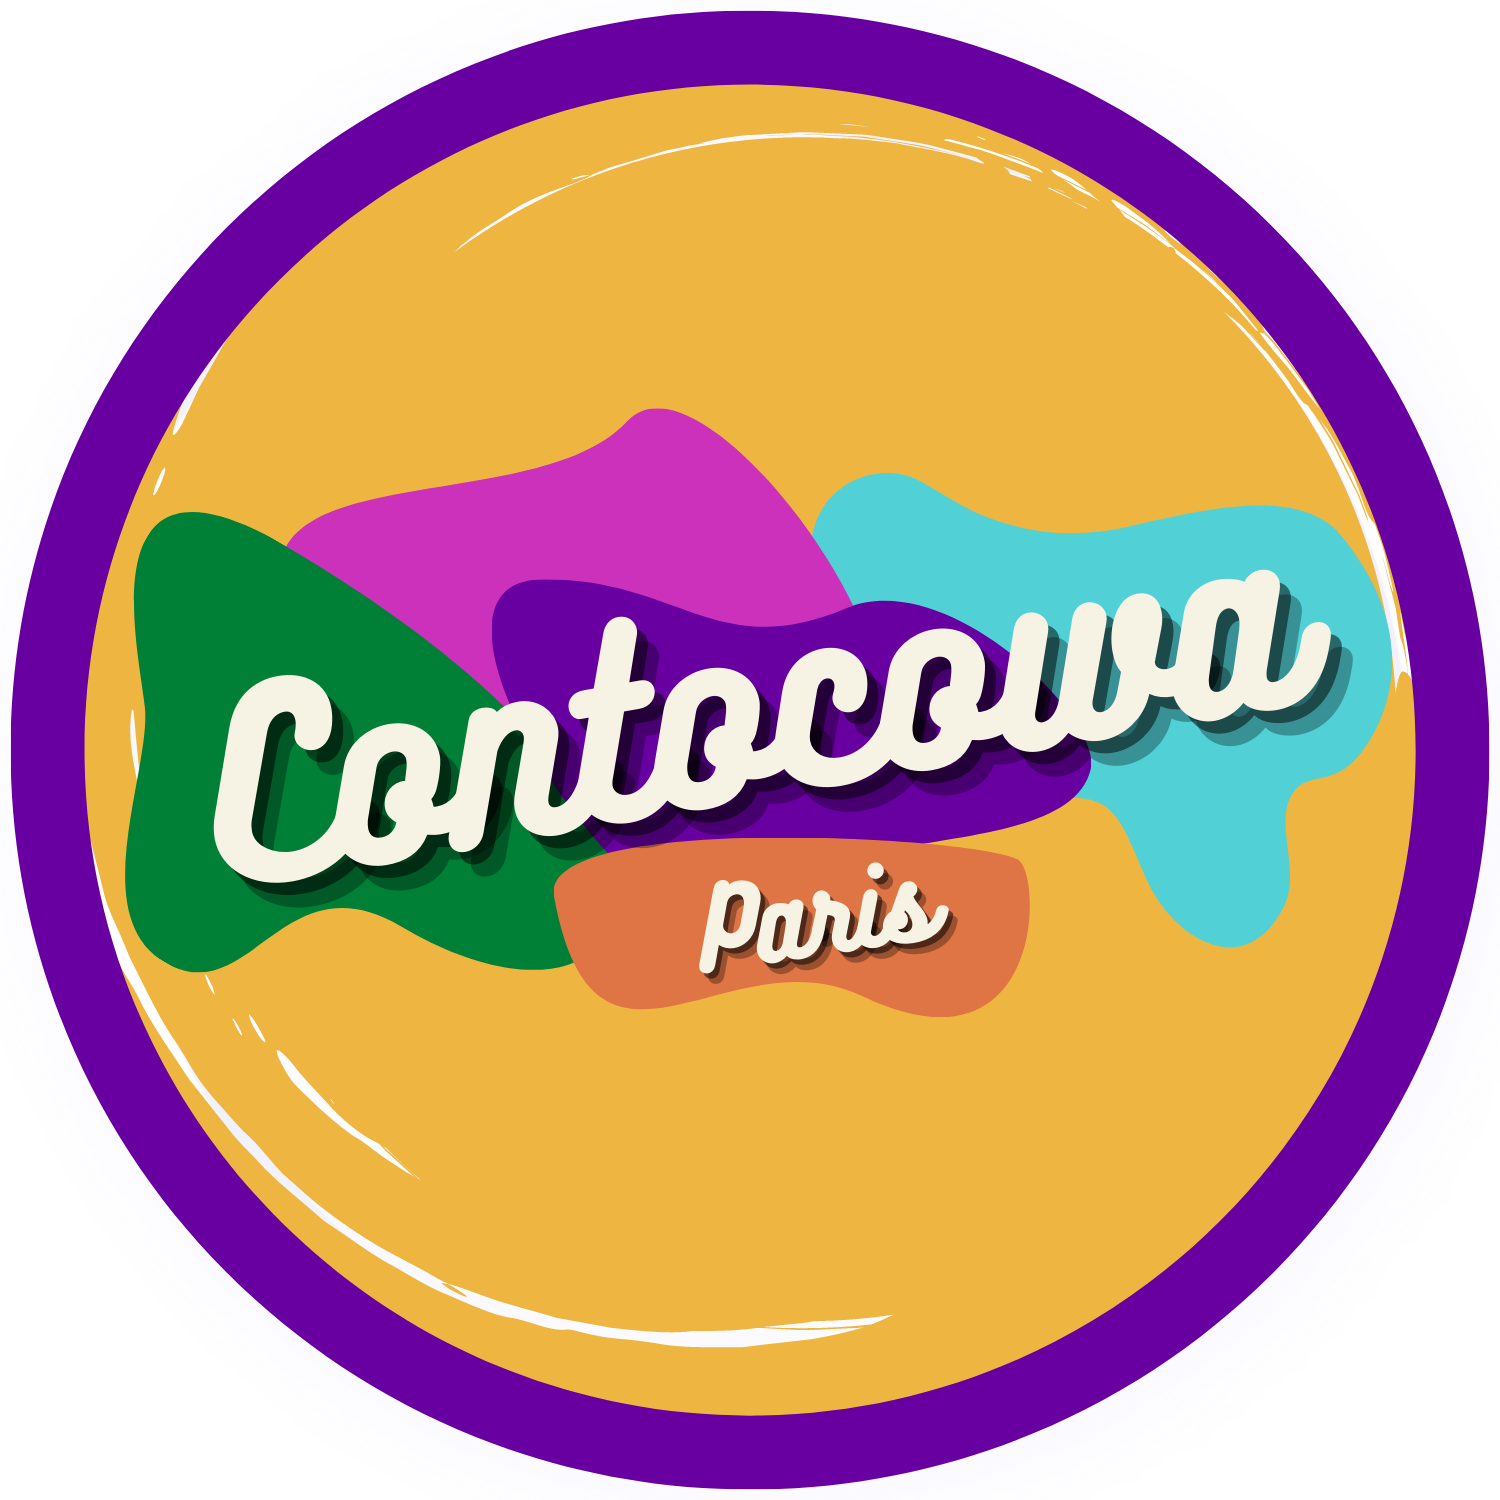 Contocowa